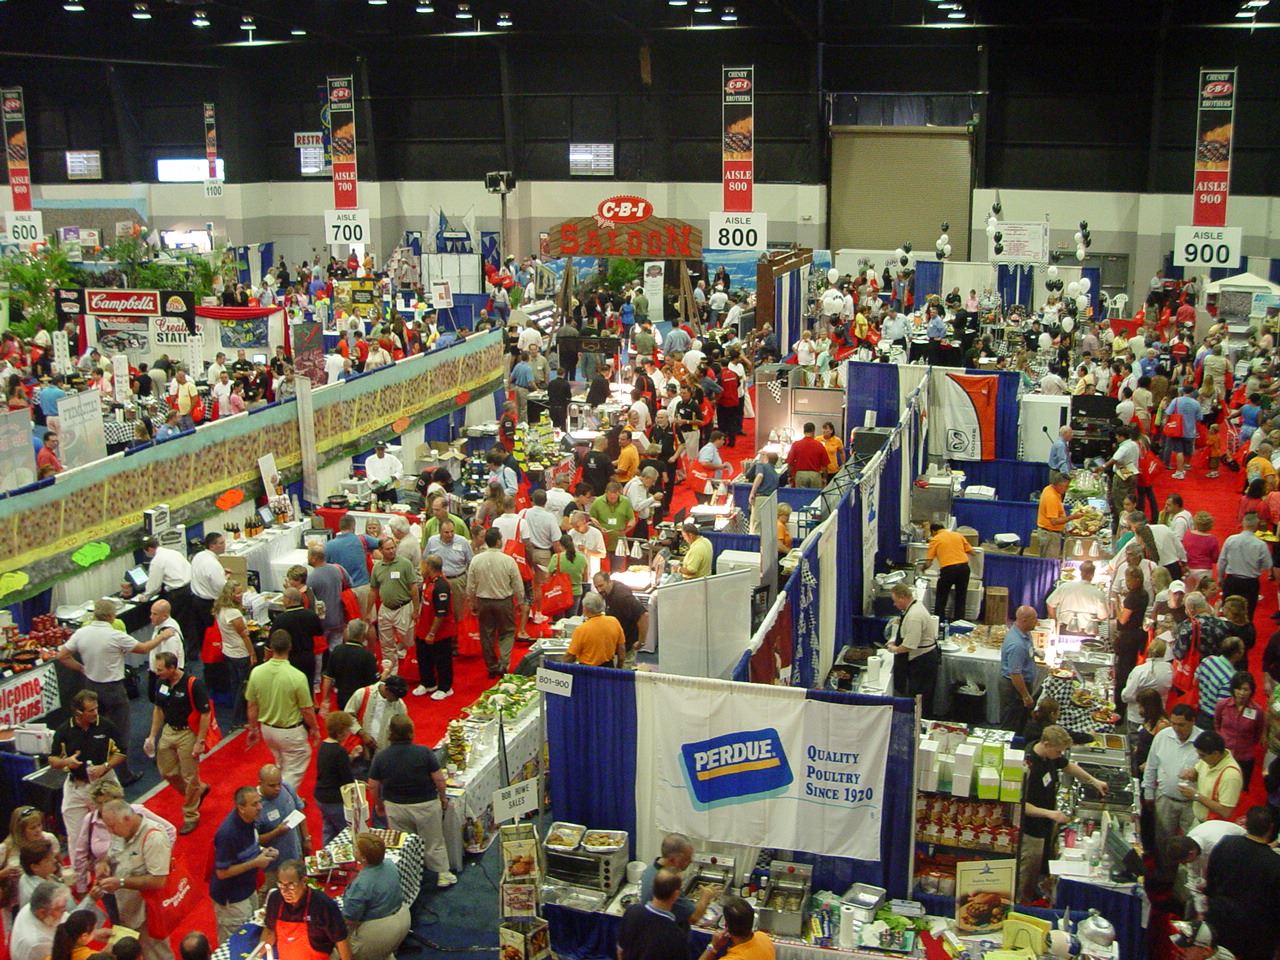 Expo Center at the South Florida Fairgrounds